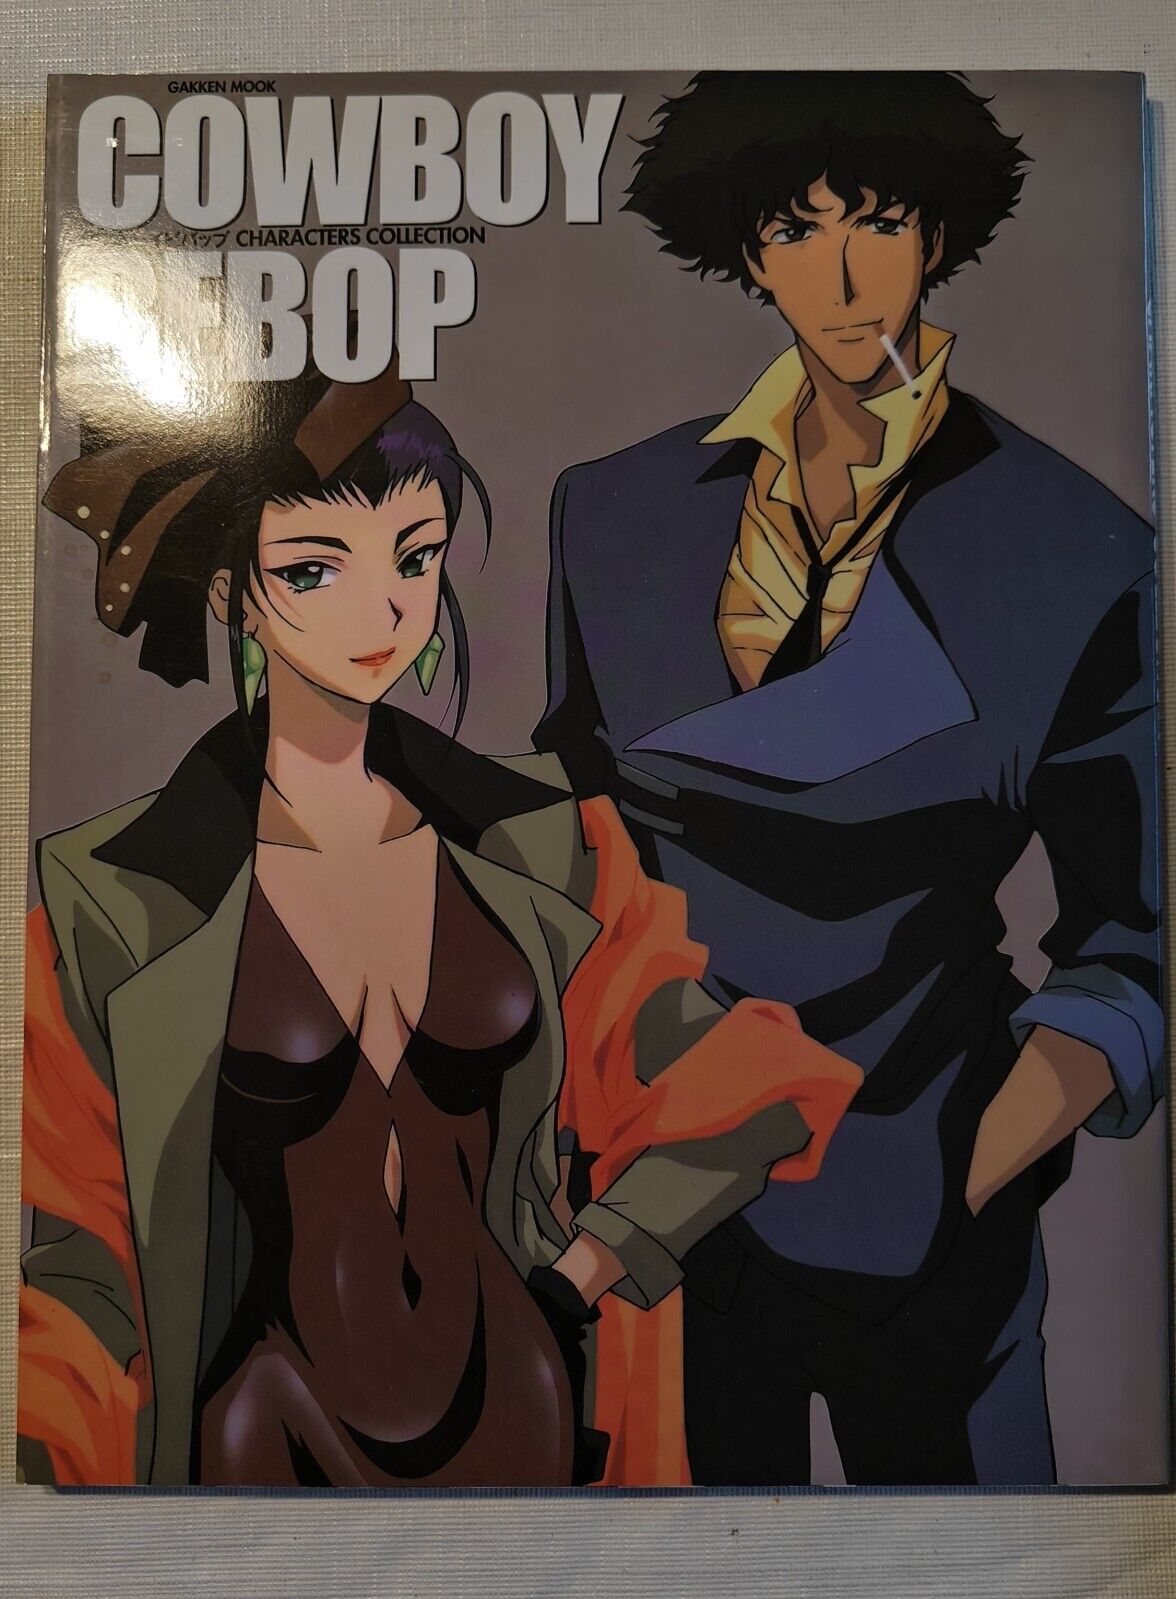 Cowboy Bebop Characters Collection Book Art Poster Anime 1999 Gakken Mook Japan